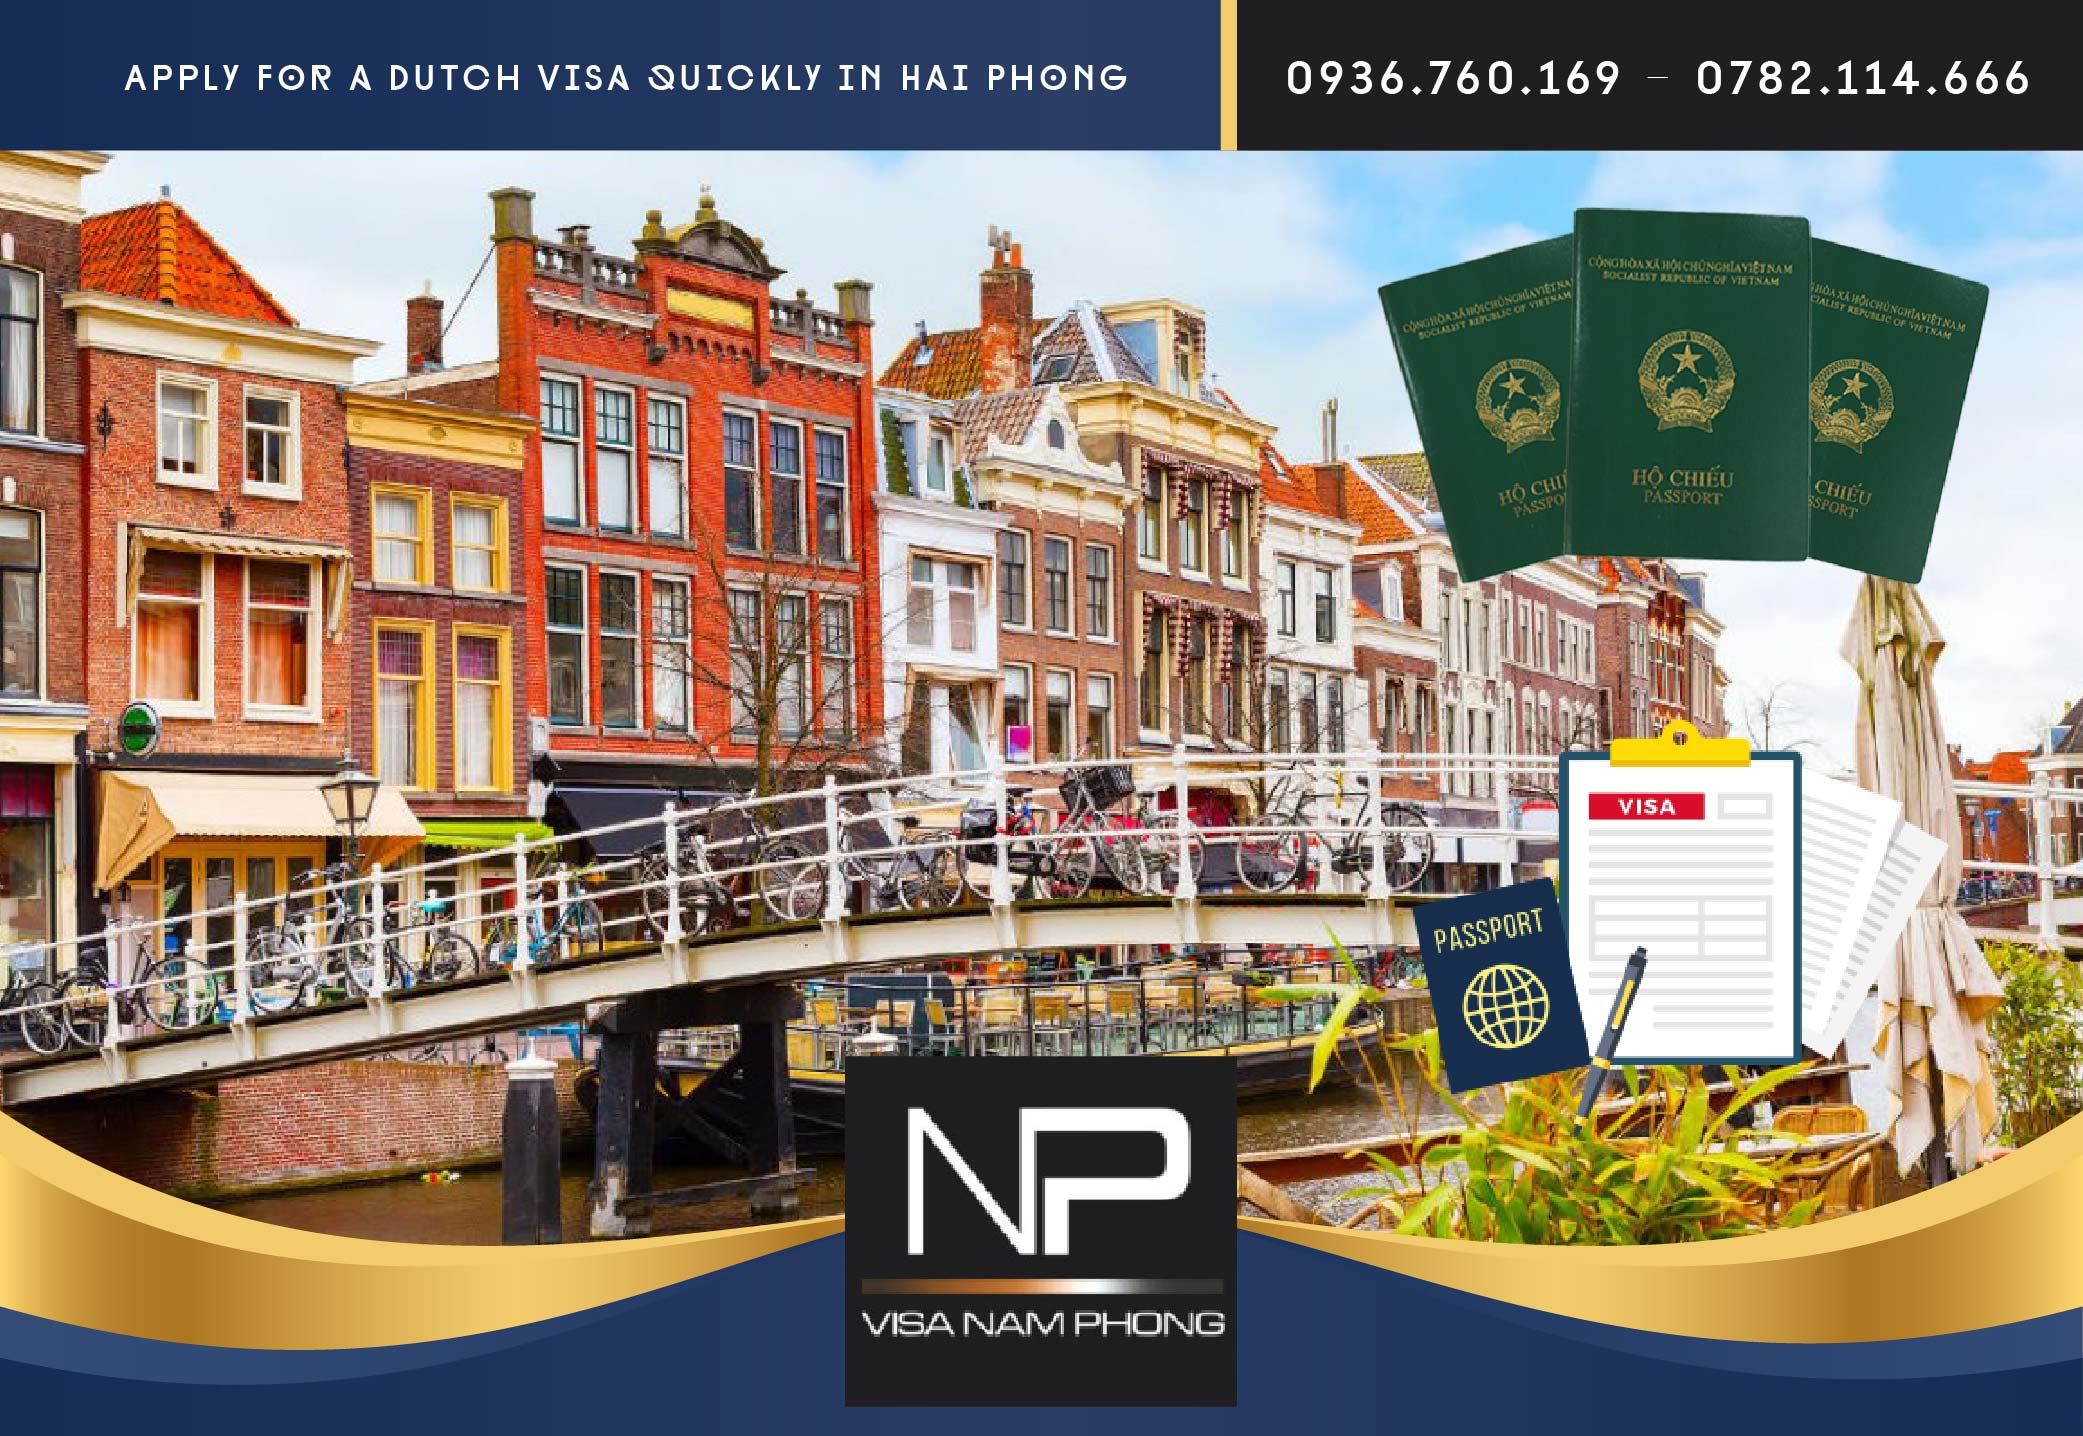 Apply for a Dutch visa quickly in Hai Phong